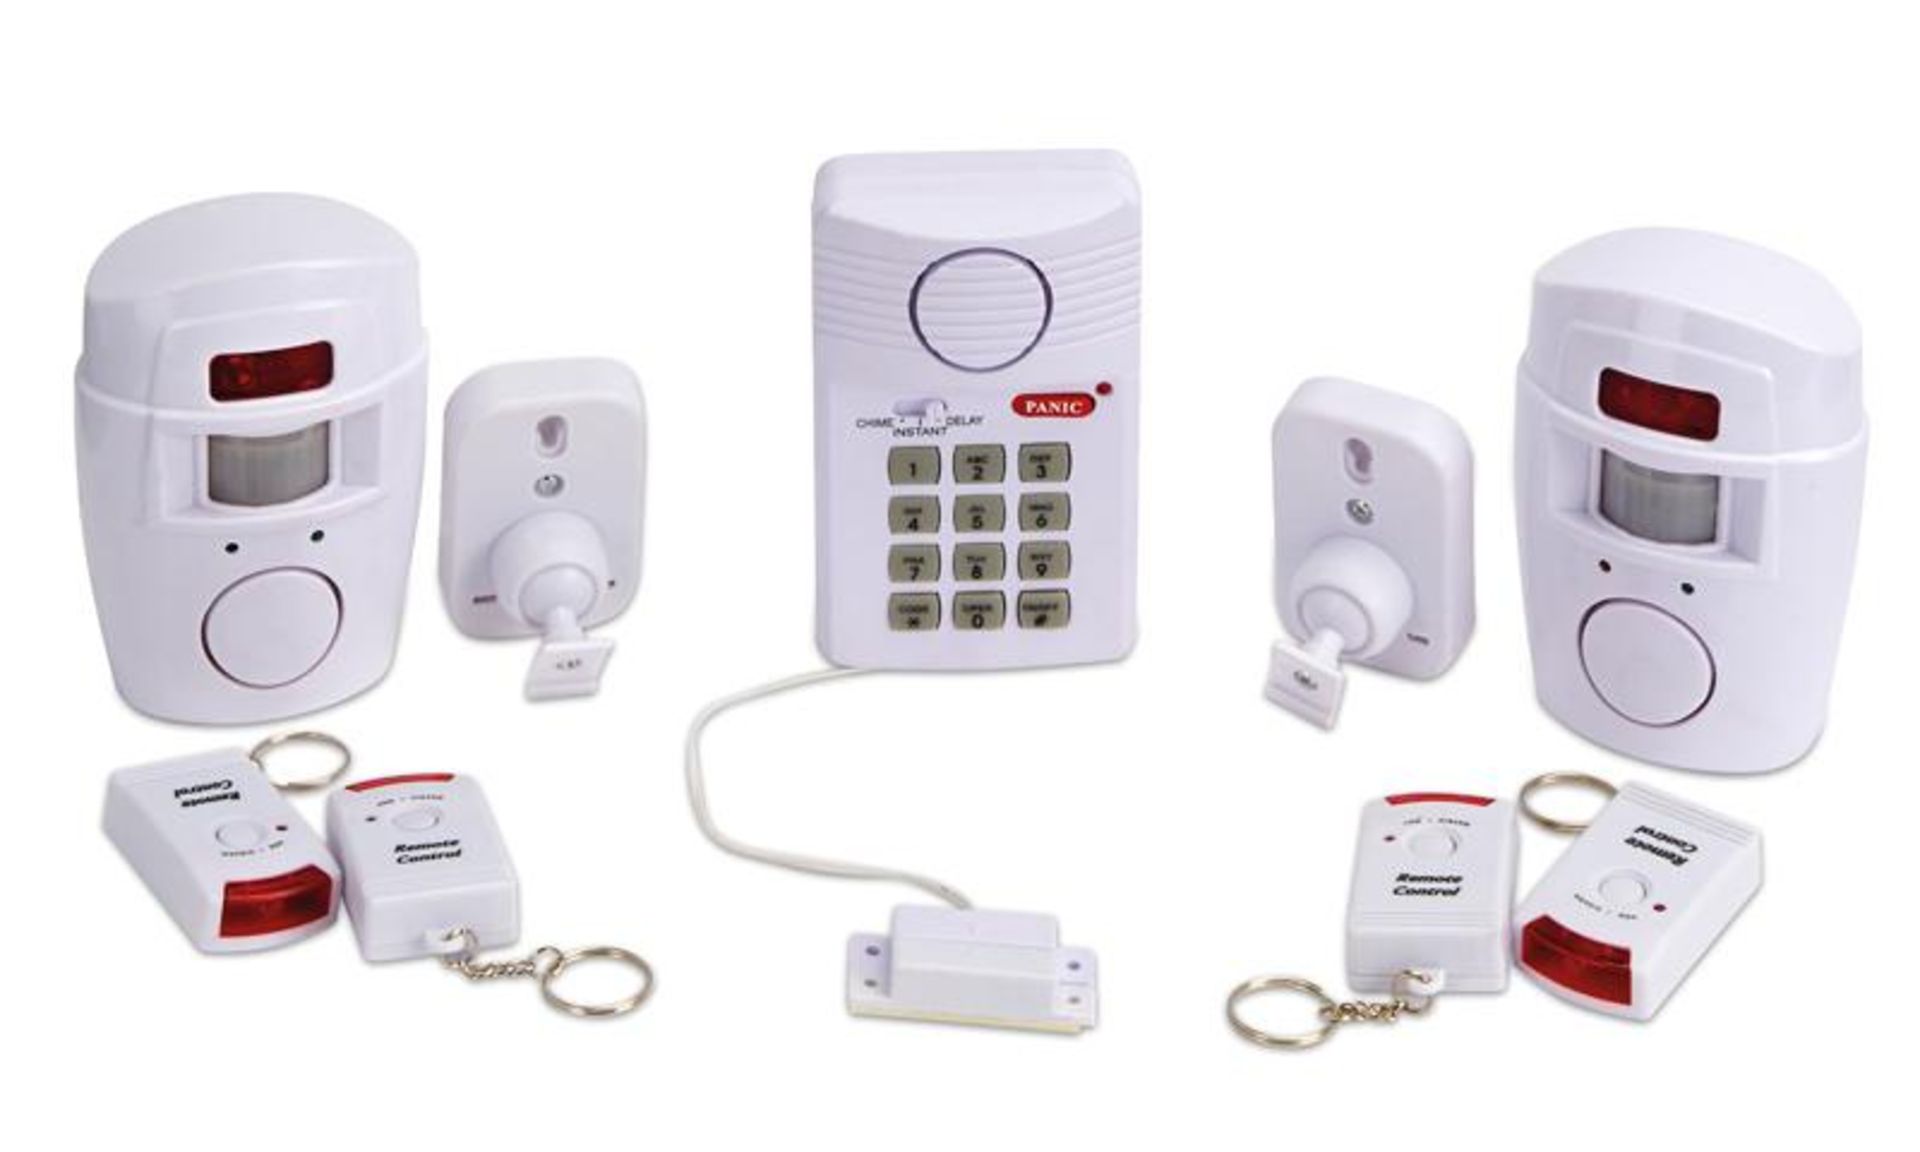 V Zennox Wireless Home Alarm System Incl 4 Remotes & 2 Sensors SRP 89.99